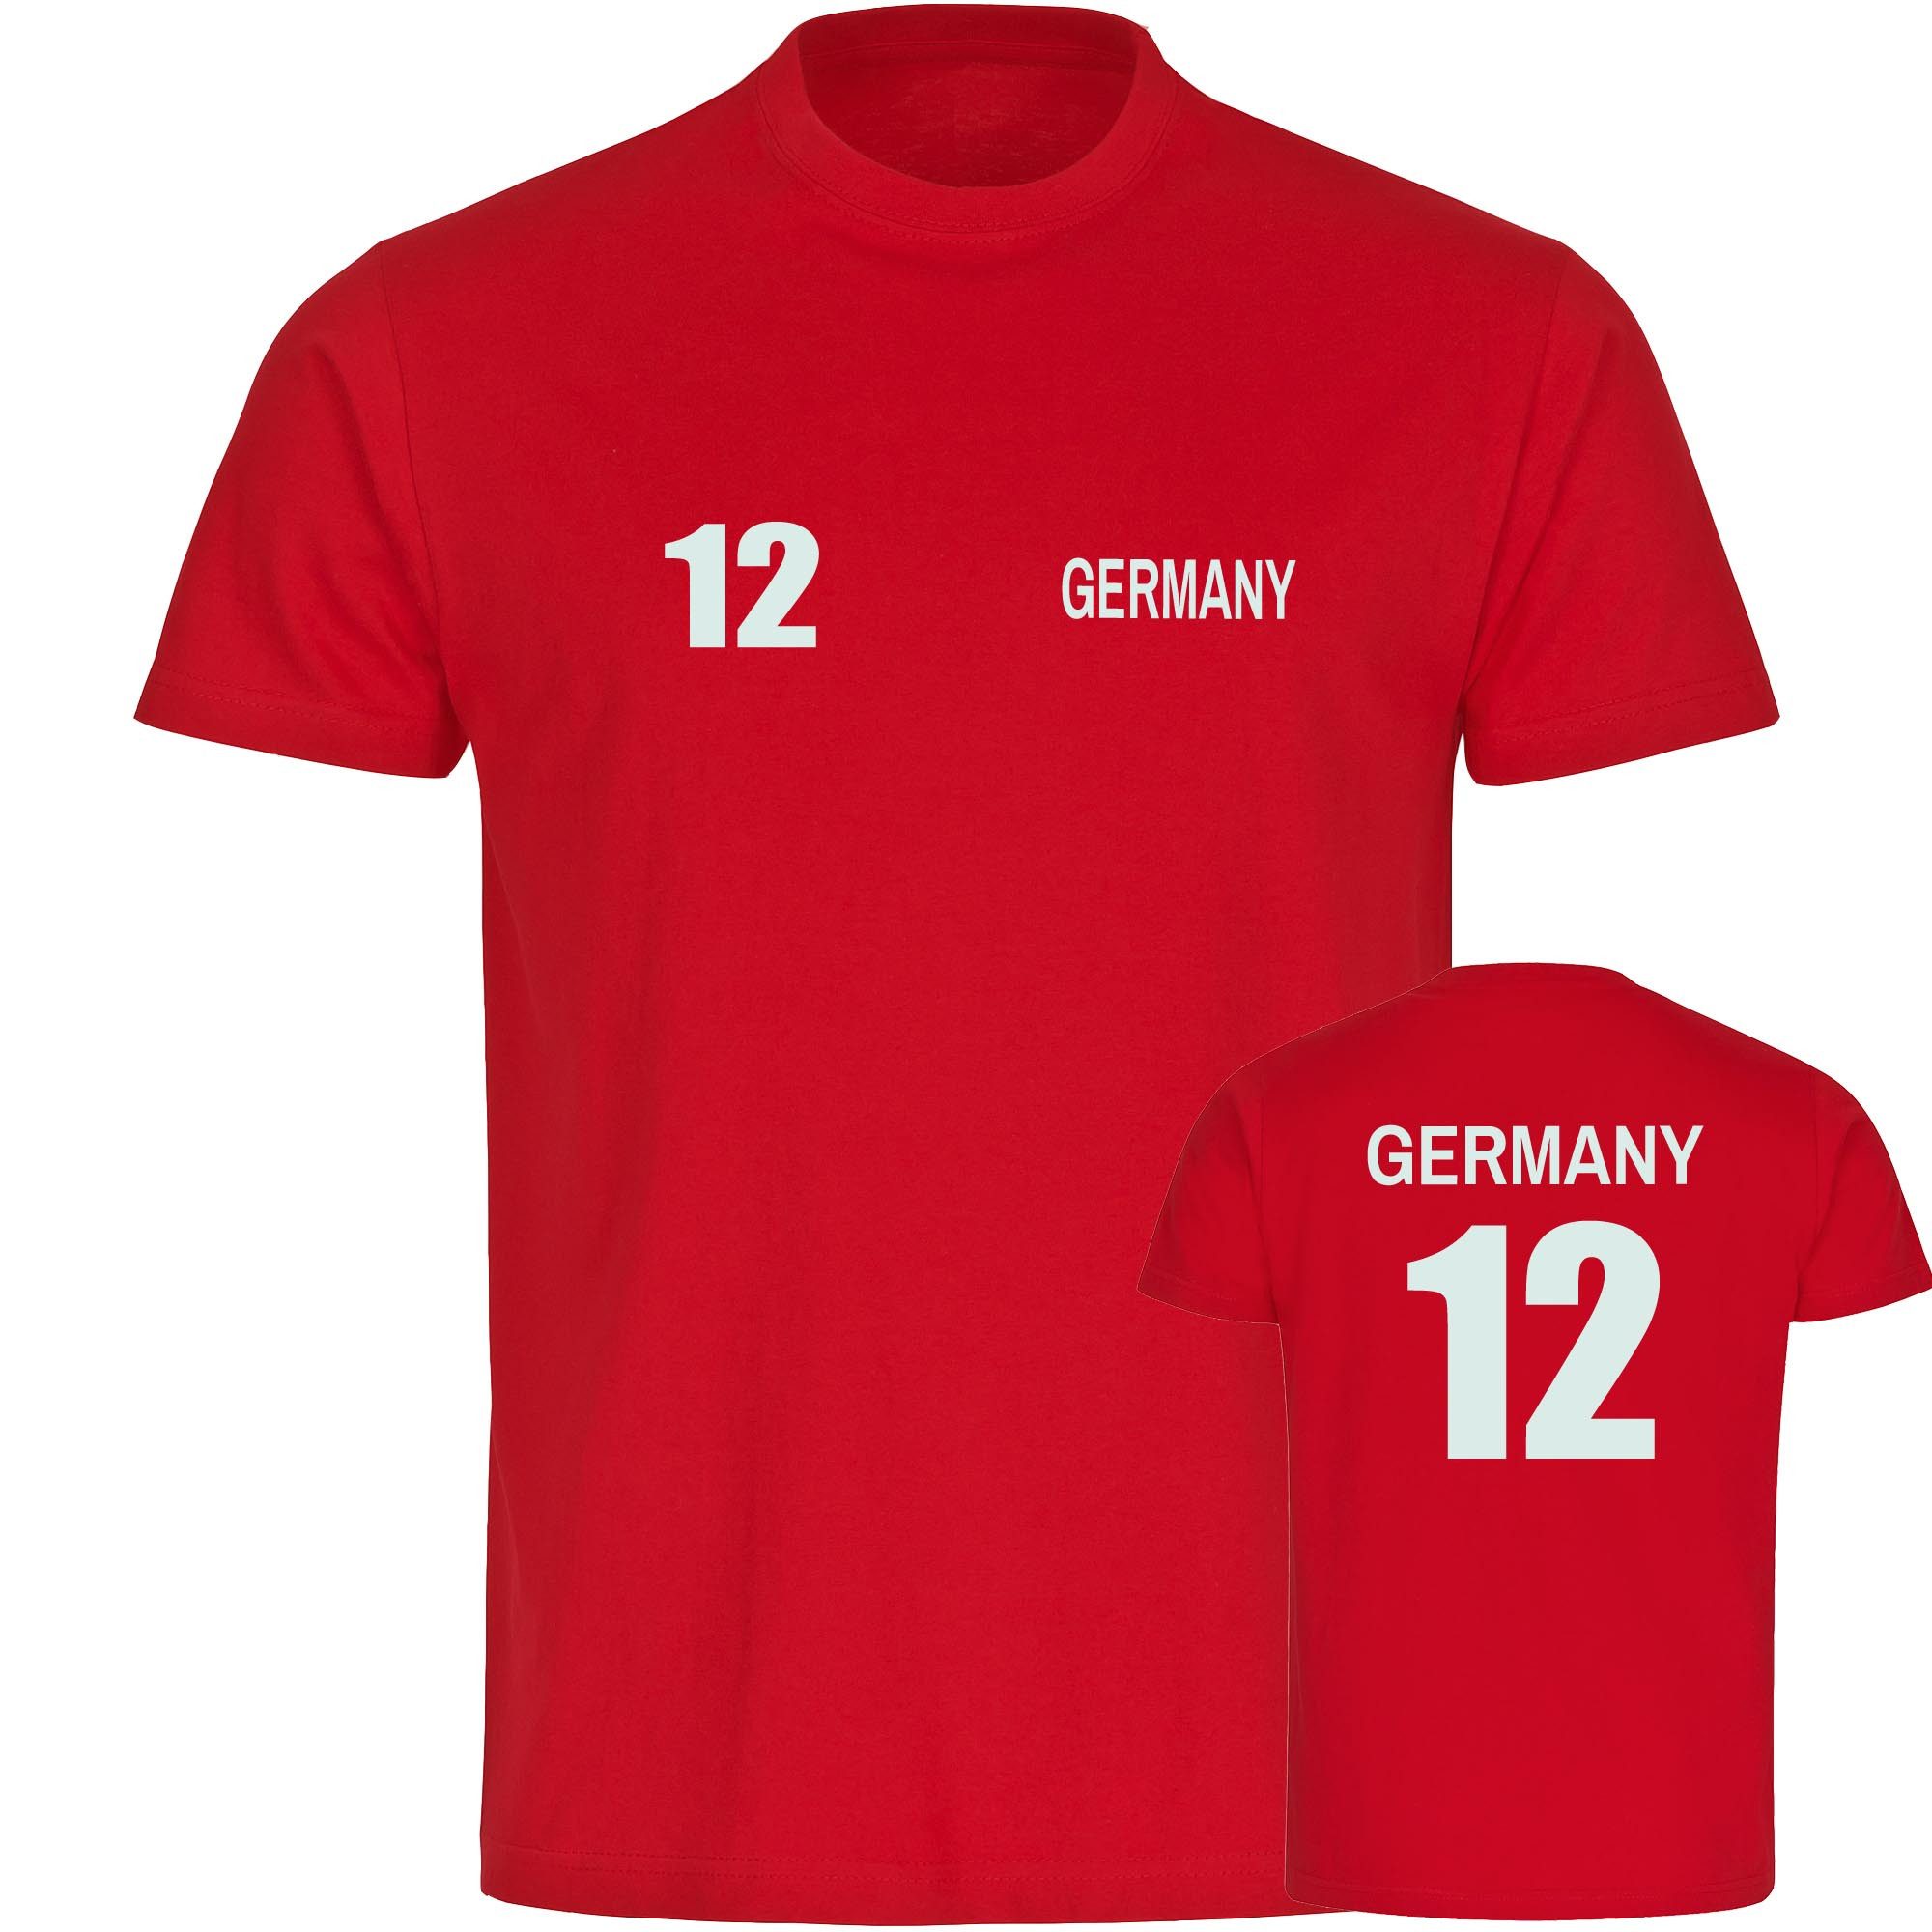 multifanshop T-Shirt Herren Germany - Trikot 12 - Männer